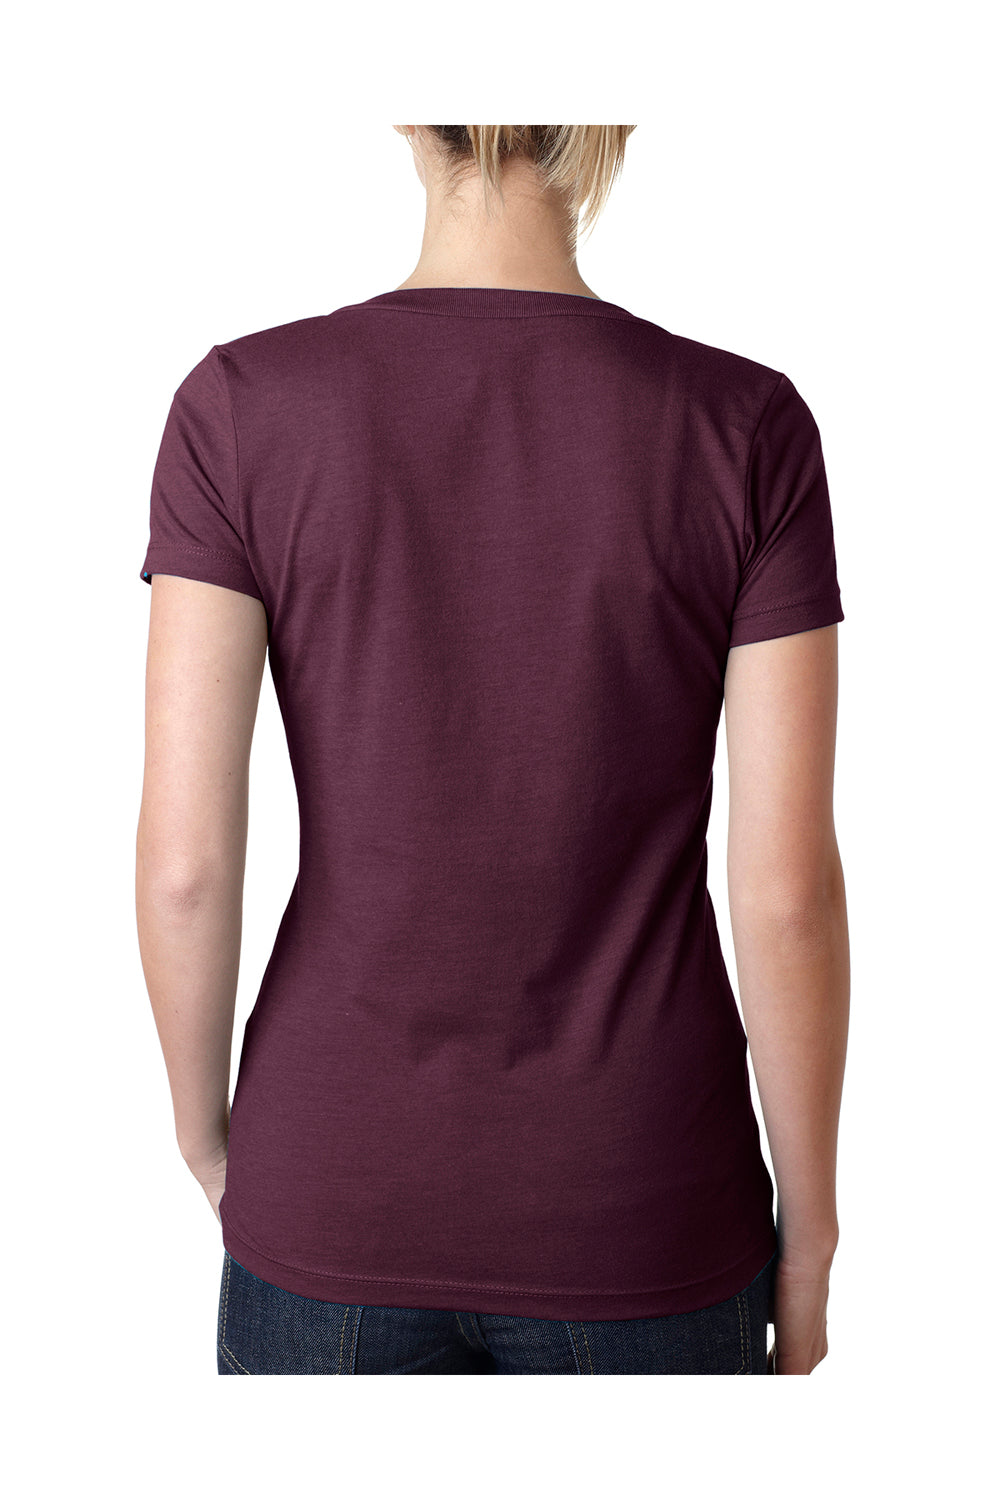 Next Level 6640 Womens CVC Jersey Short Sleeve V-Neck T-Shirt Plum Purple Back